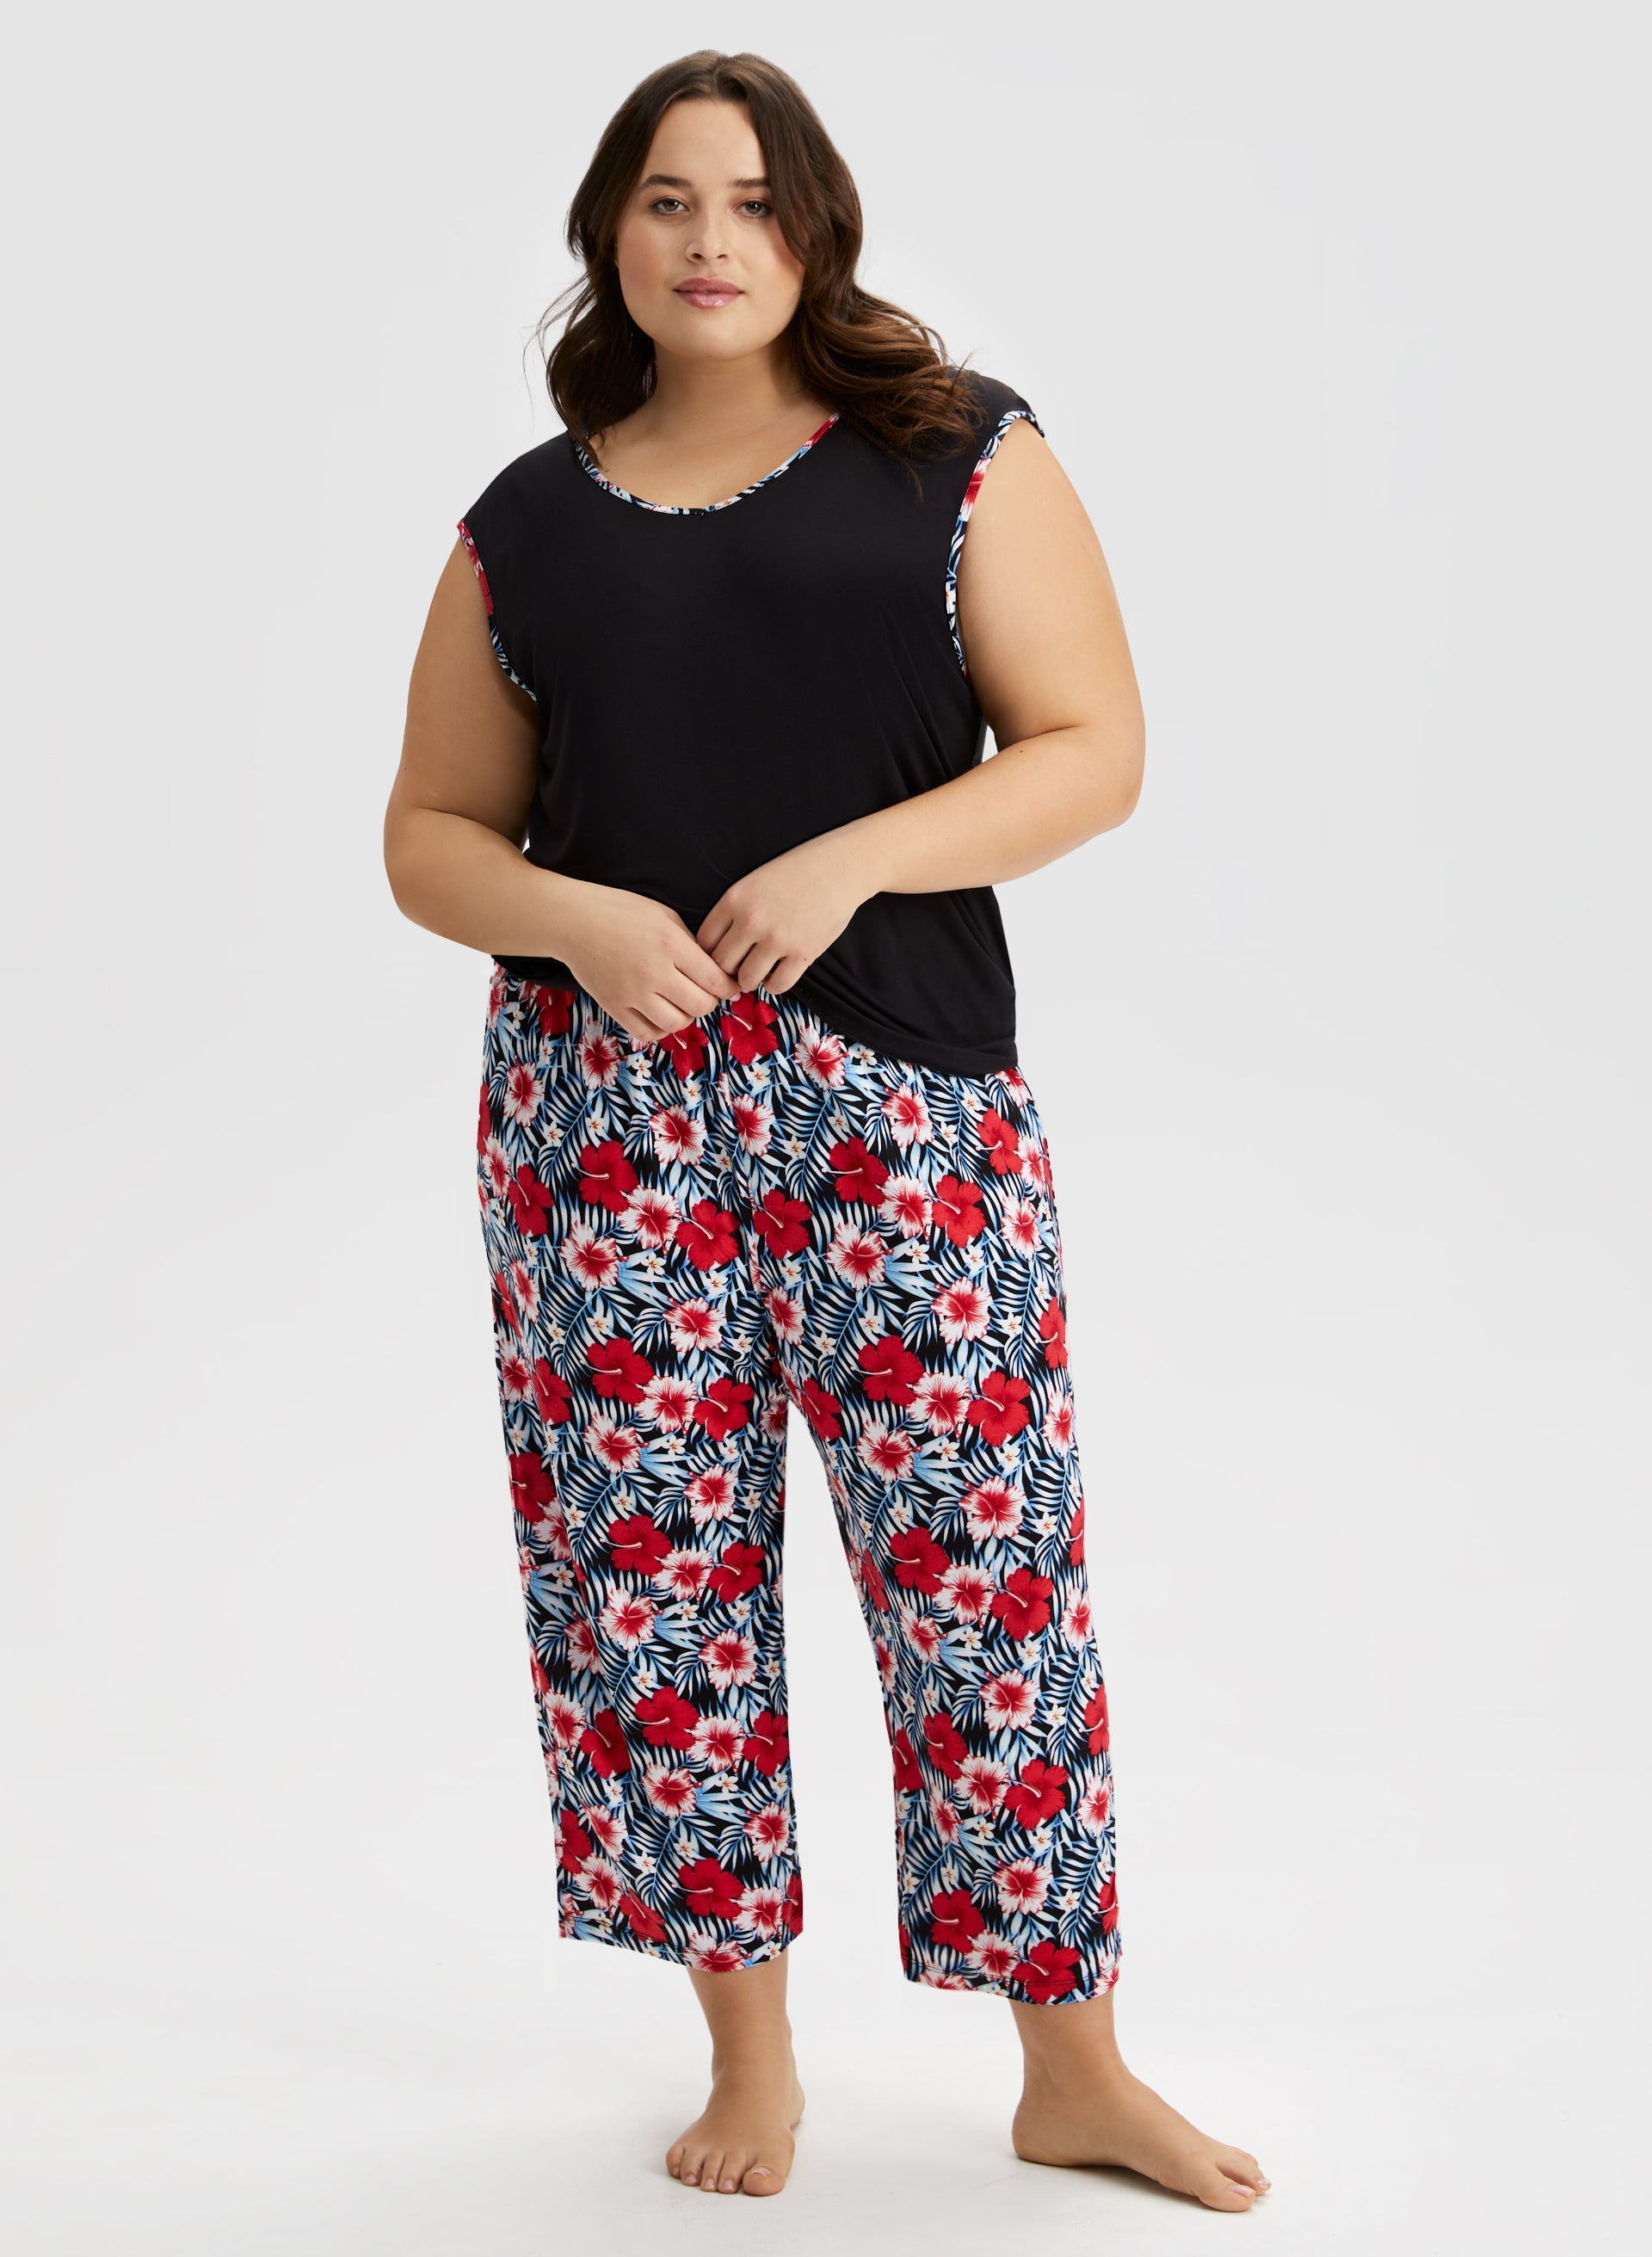 Tropical Floral Print Pyjama Set